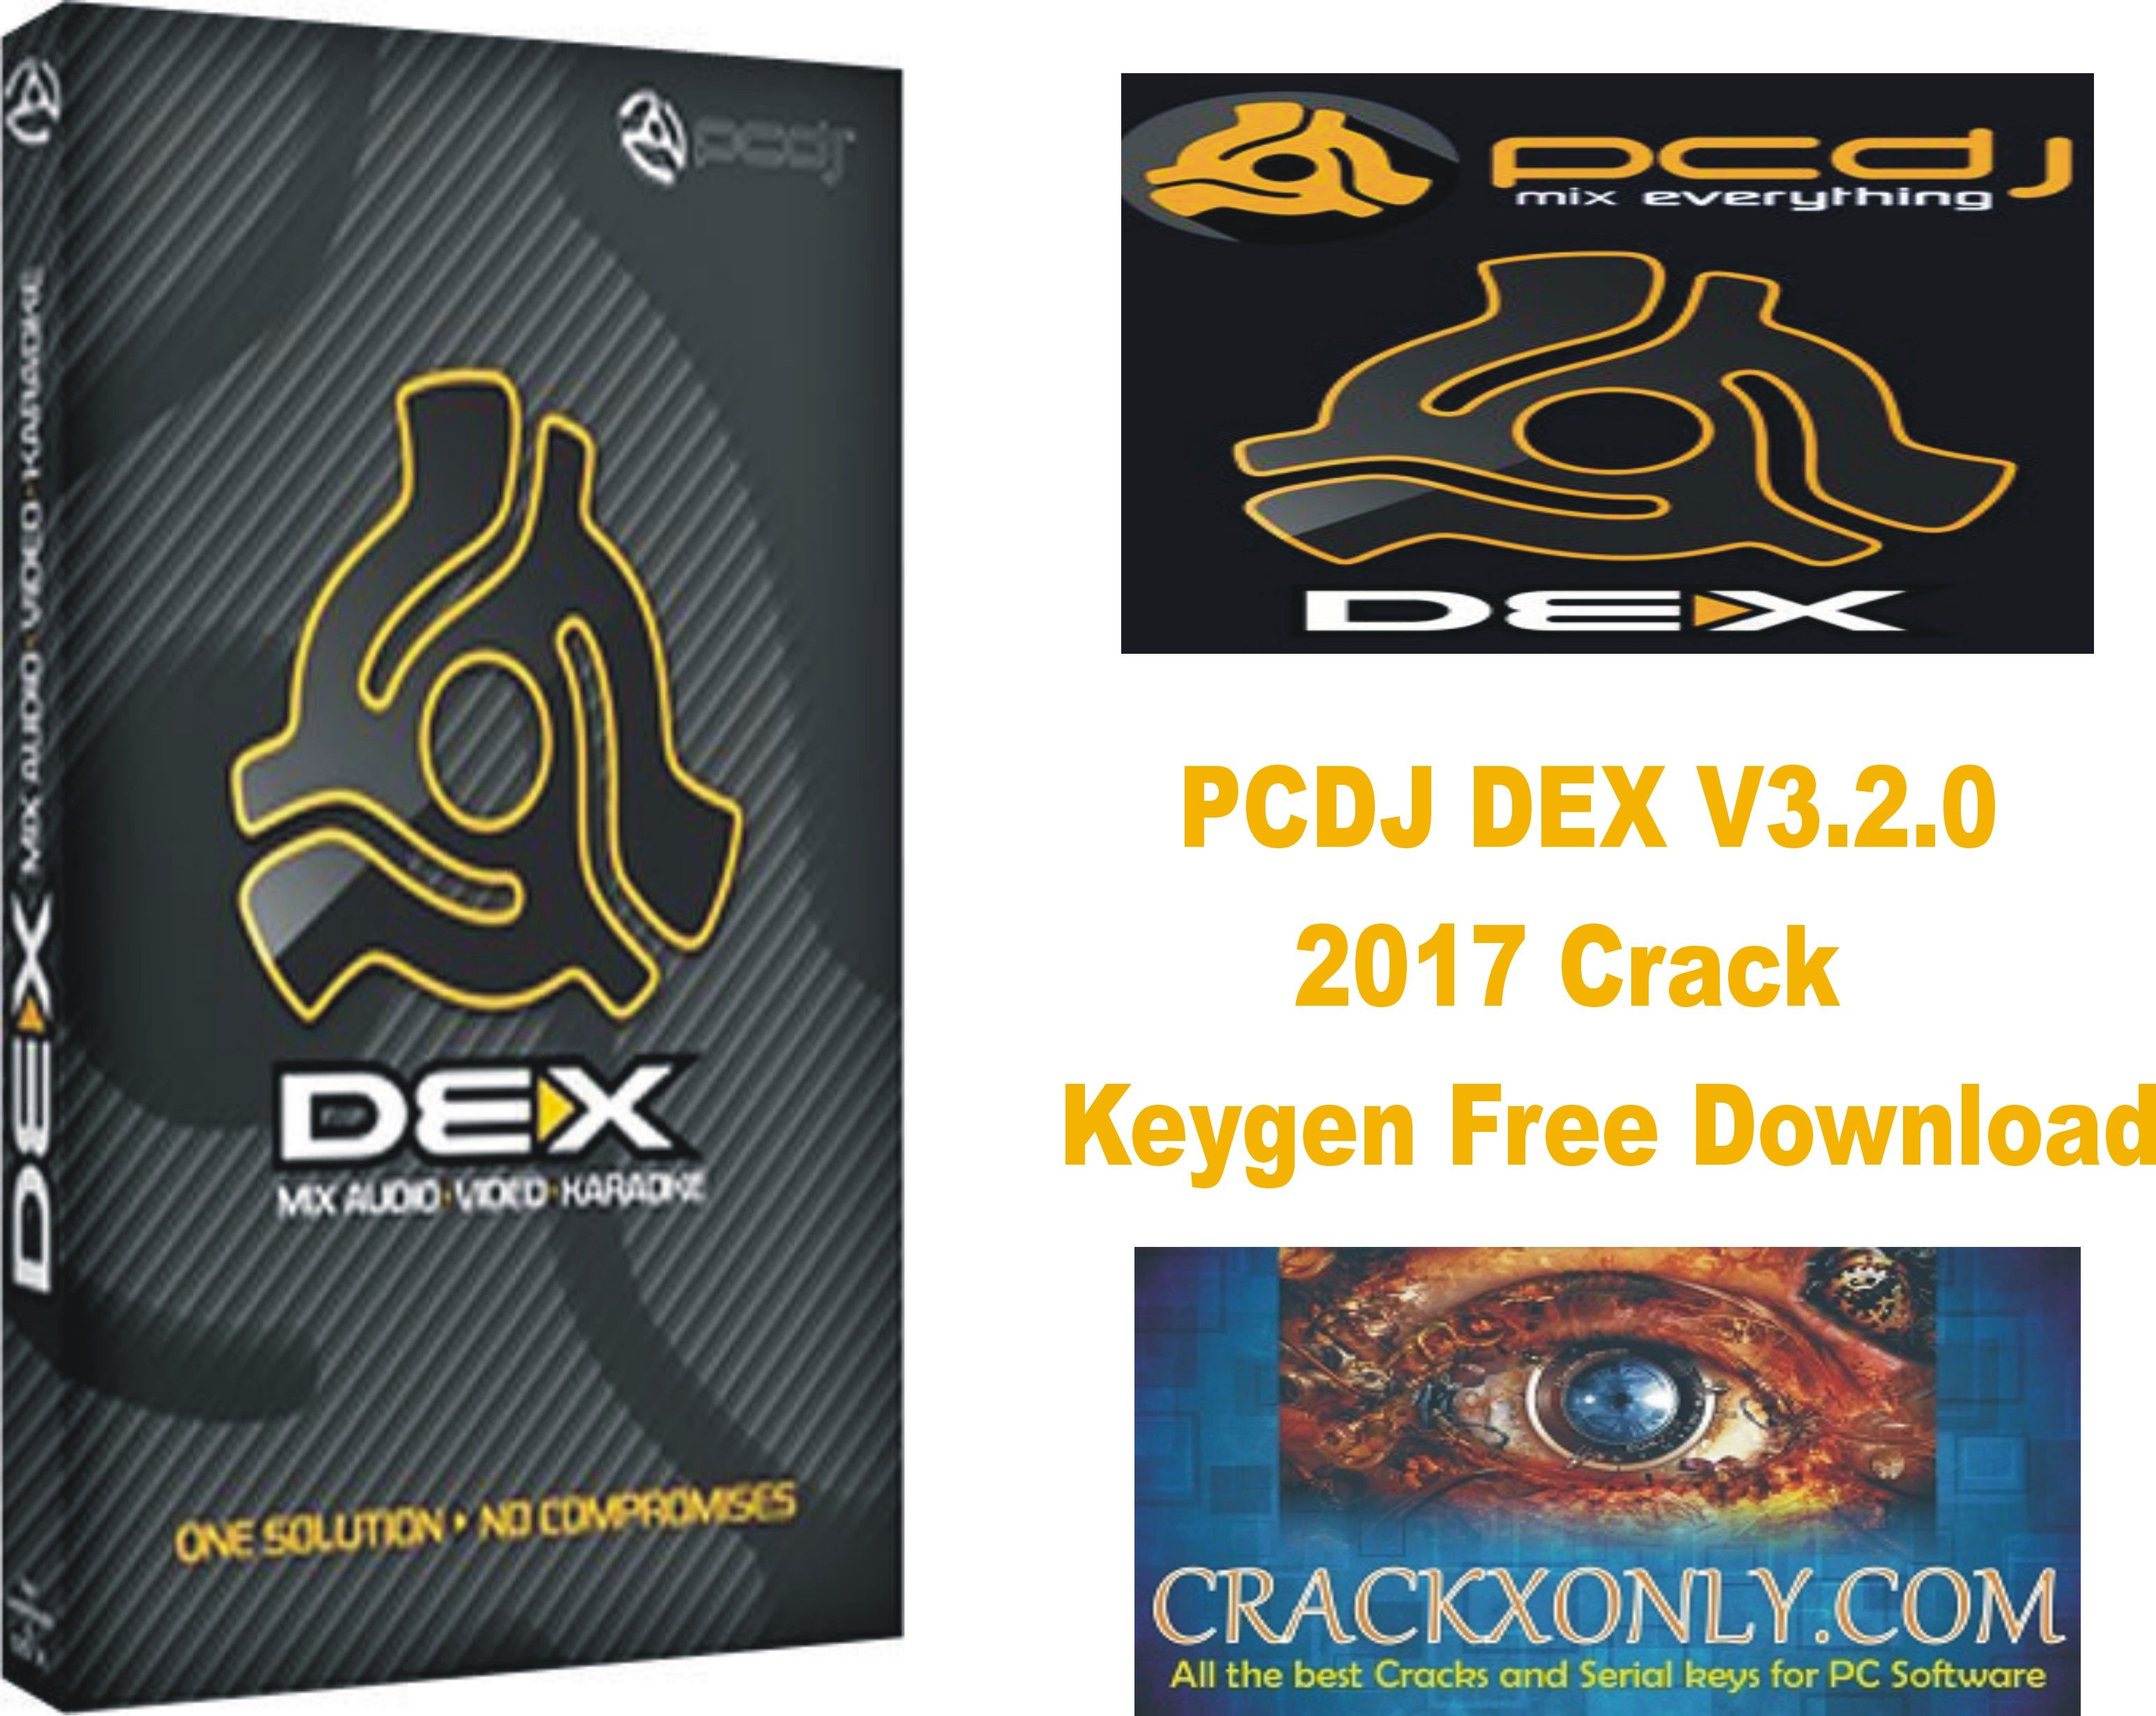 Pcdj dex 3 download with crack